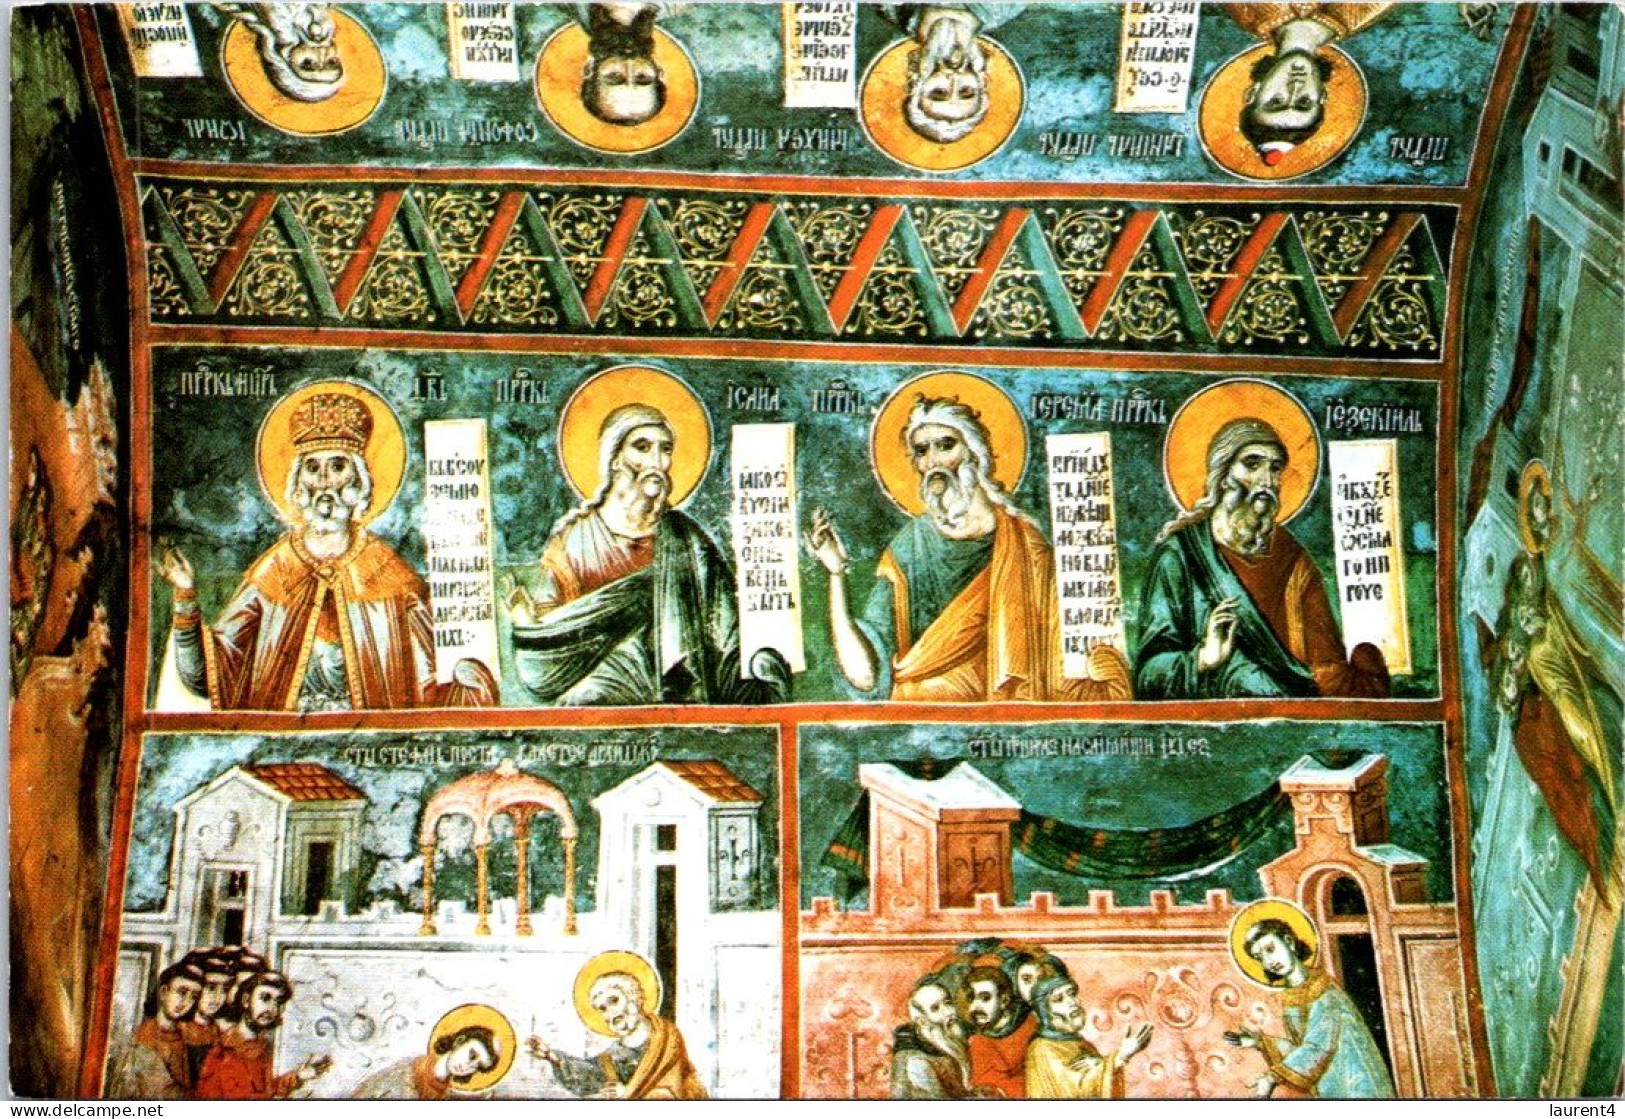 2-5-2024 (3 Z 36) Croatia (Ex Yugolsavia) Religious Church Painting In Zagreb (2 Postcards) - Schilderijen